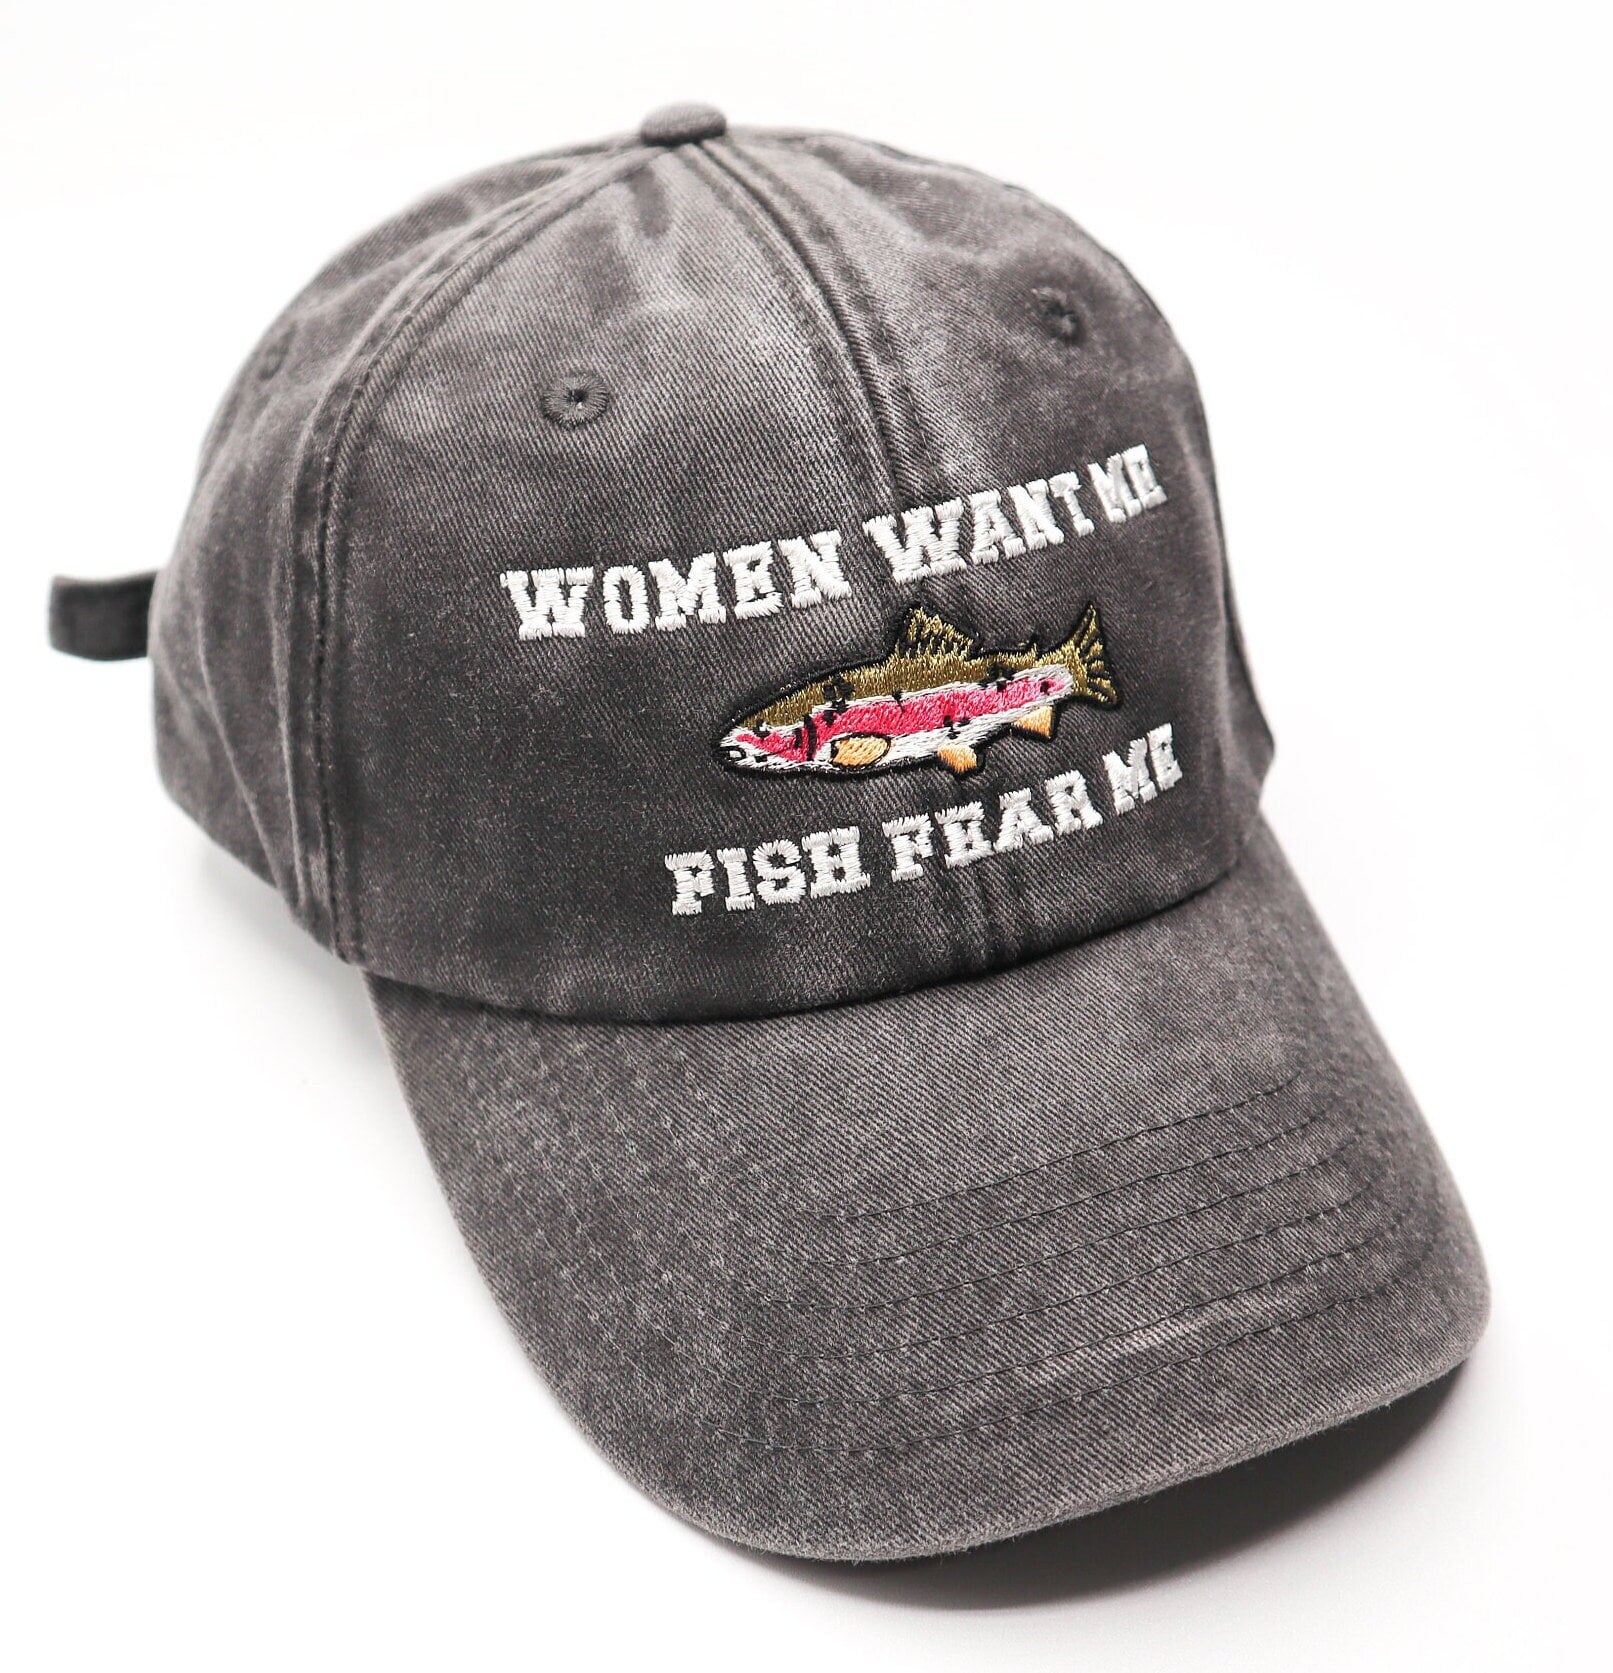 Women Want Me Fish Fear Me Hat Transparent PNG Digital Download HD